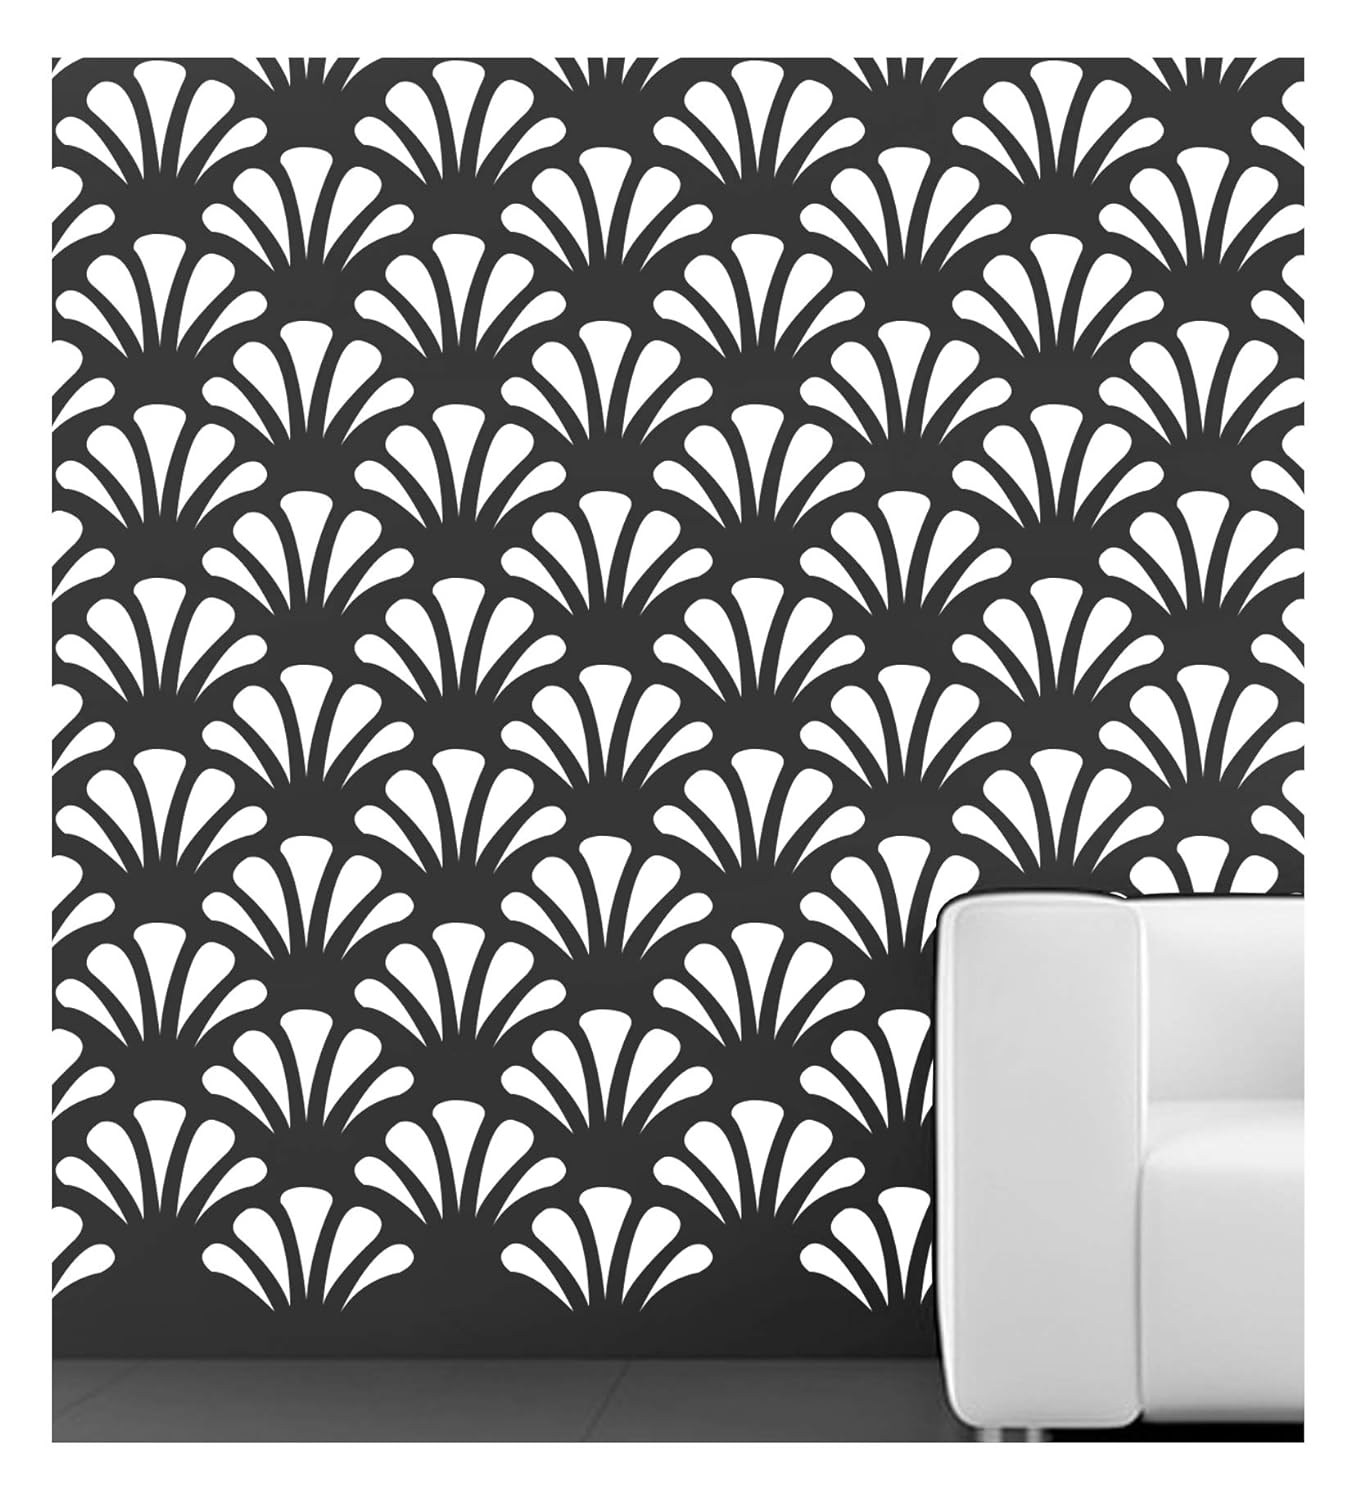 Sea Shells Wall Design Stencil (KHS308)